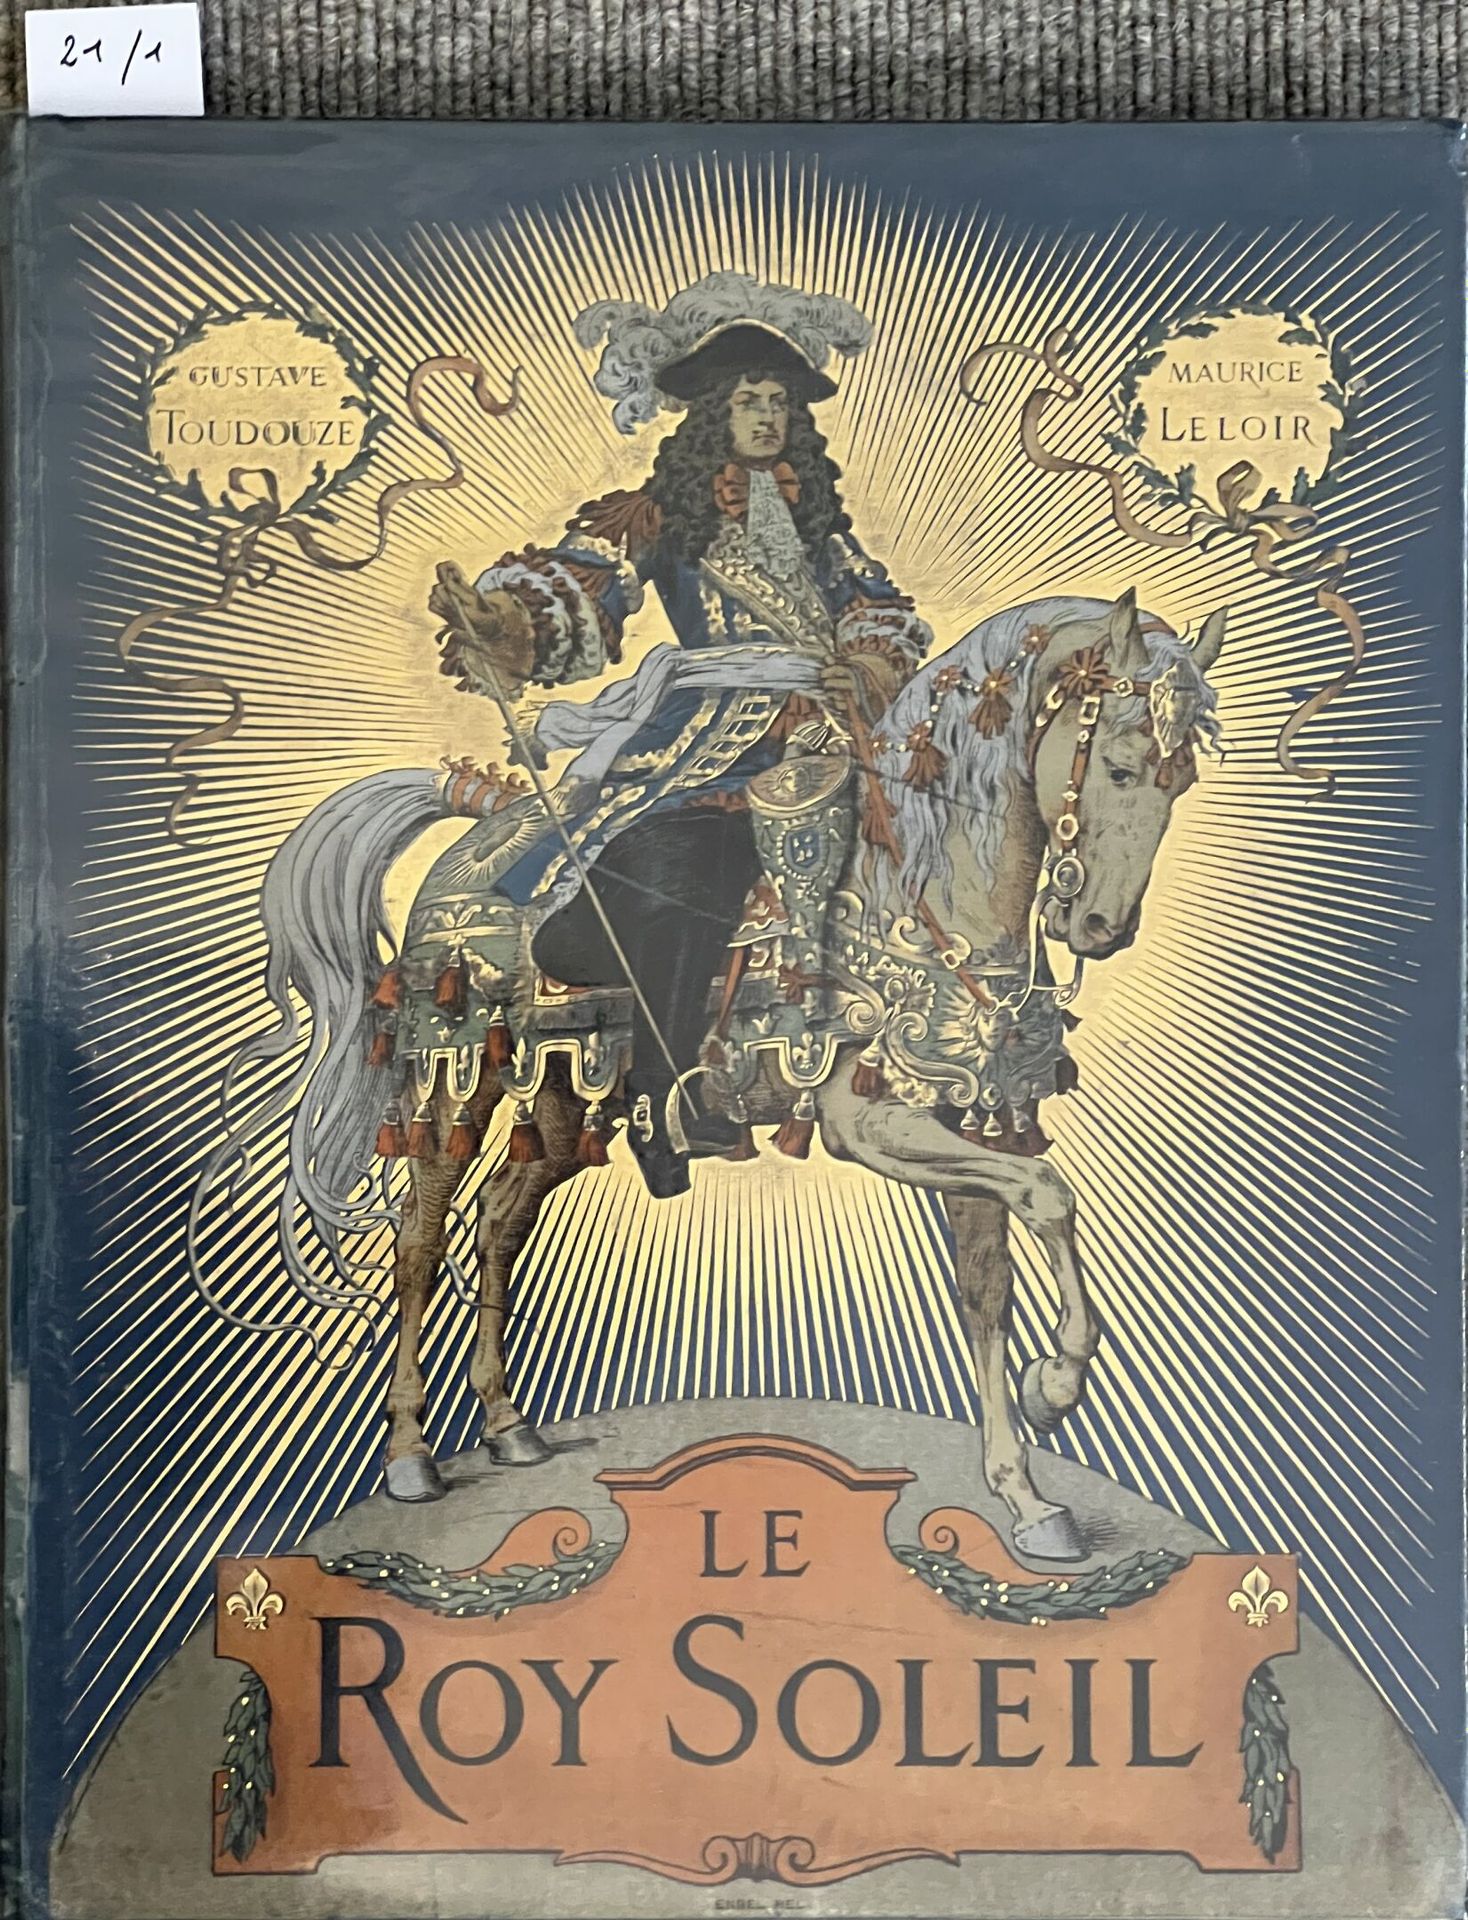 Null Le Roy Soleil
Gustave Toudouze, illustration by Maurice Leloir, Combet & Ci&hellip;